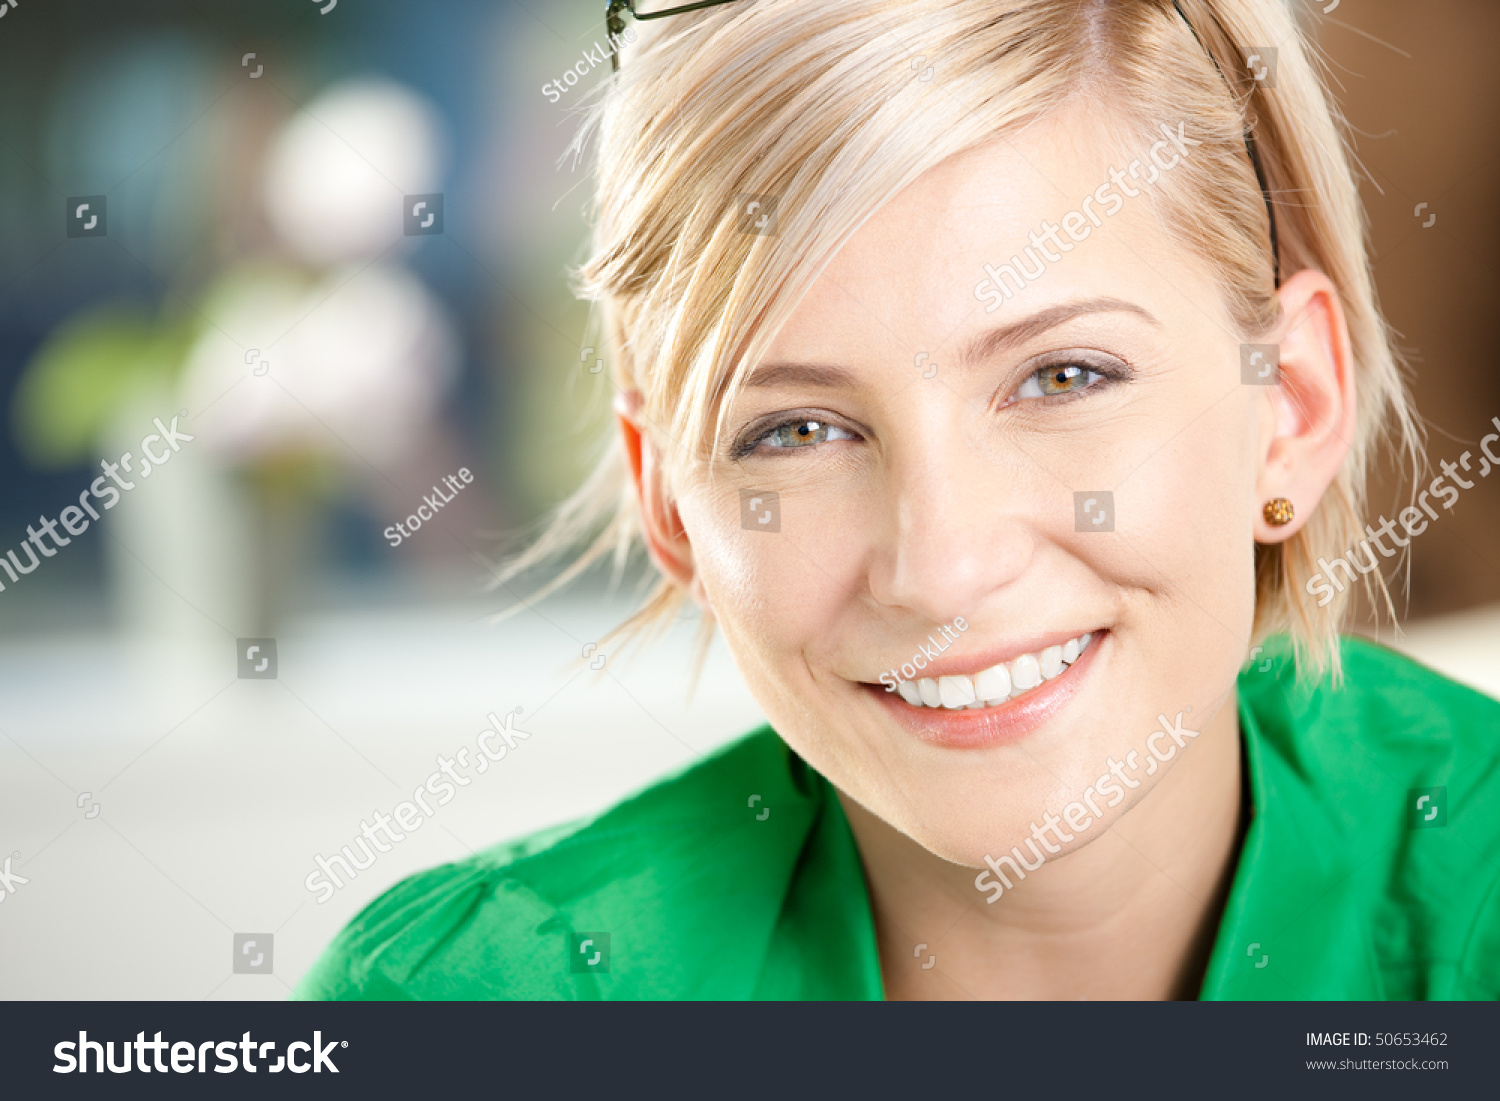 Closeup portrait of happy young businesswoman wearing green shirt, smiling. #50653462